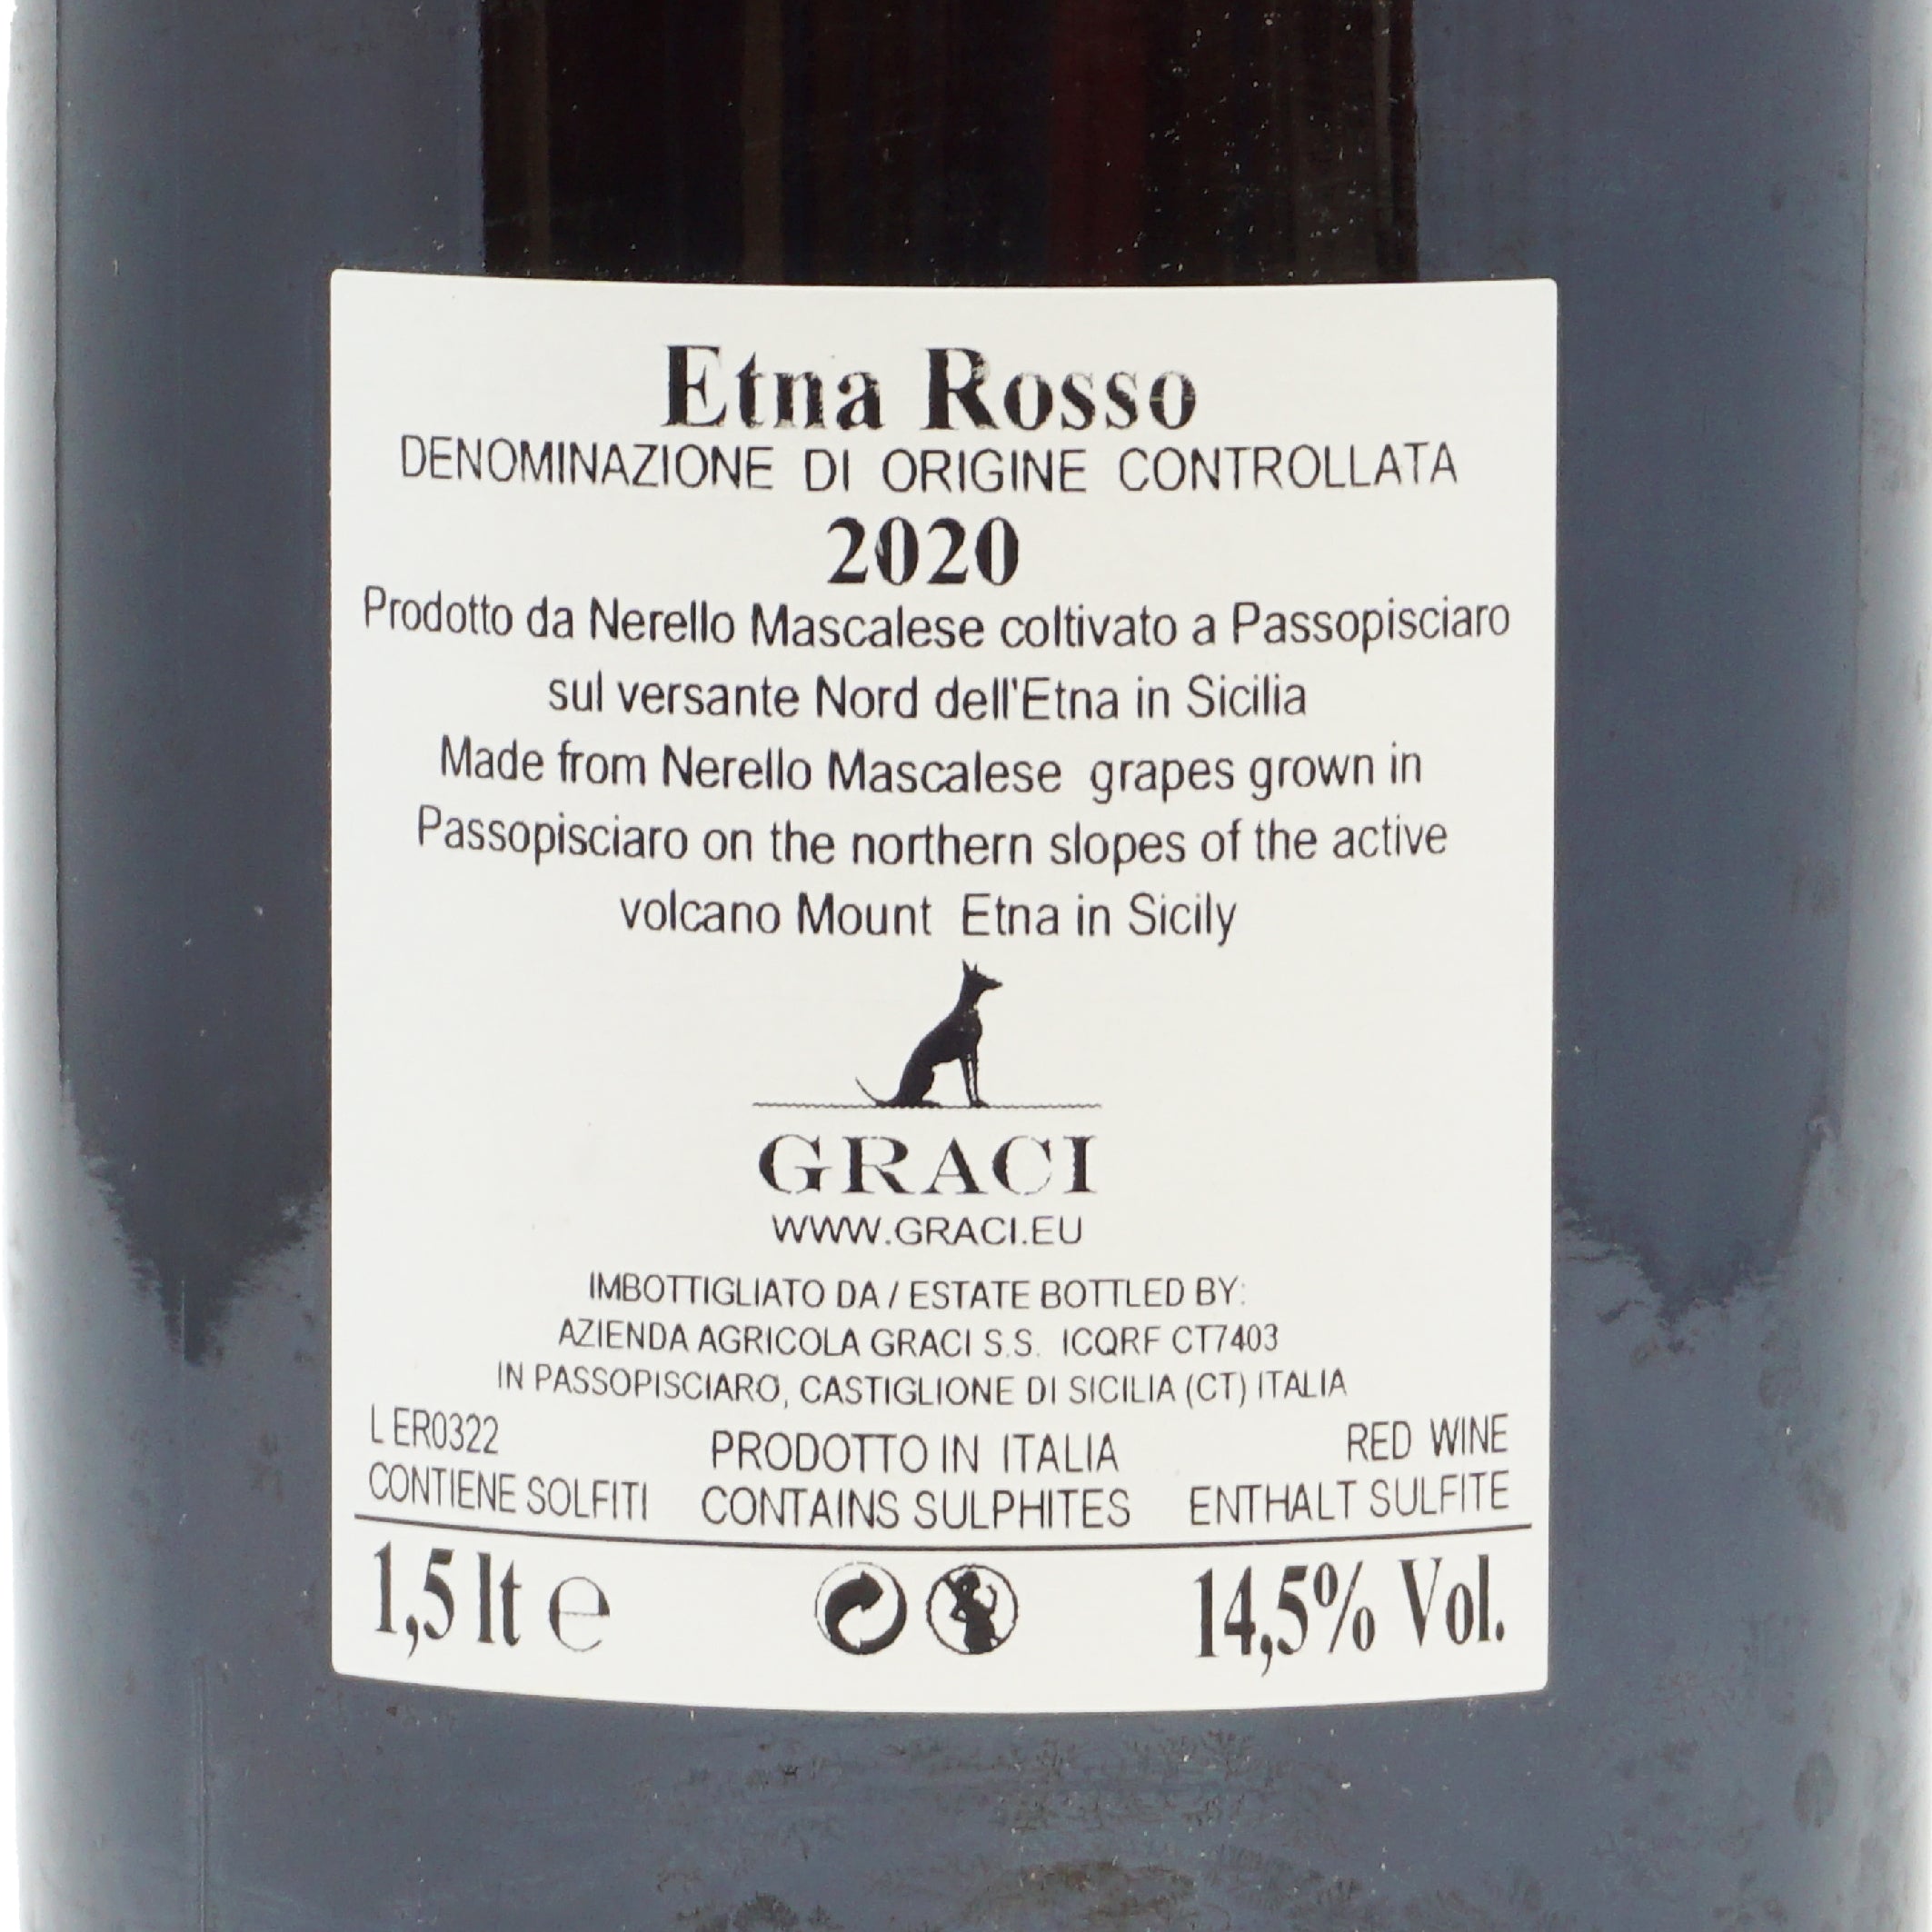 Etna Rosso 2020 Doc Graci Magnum